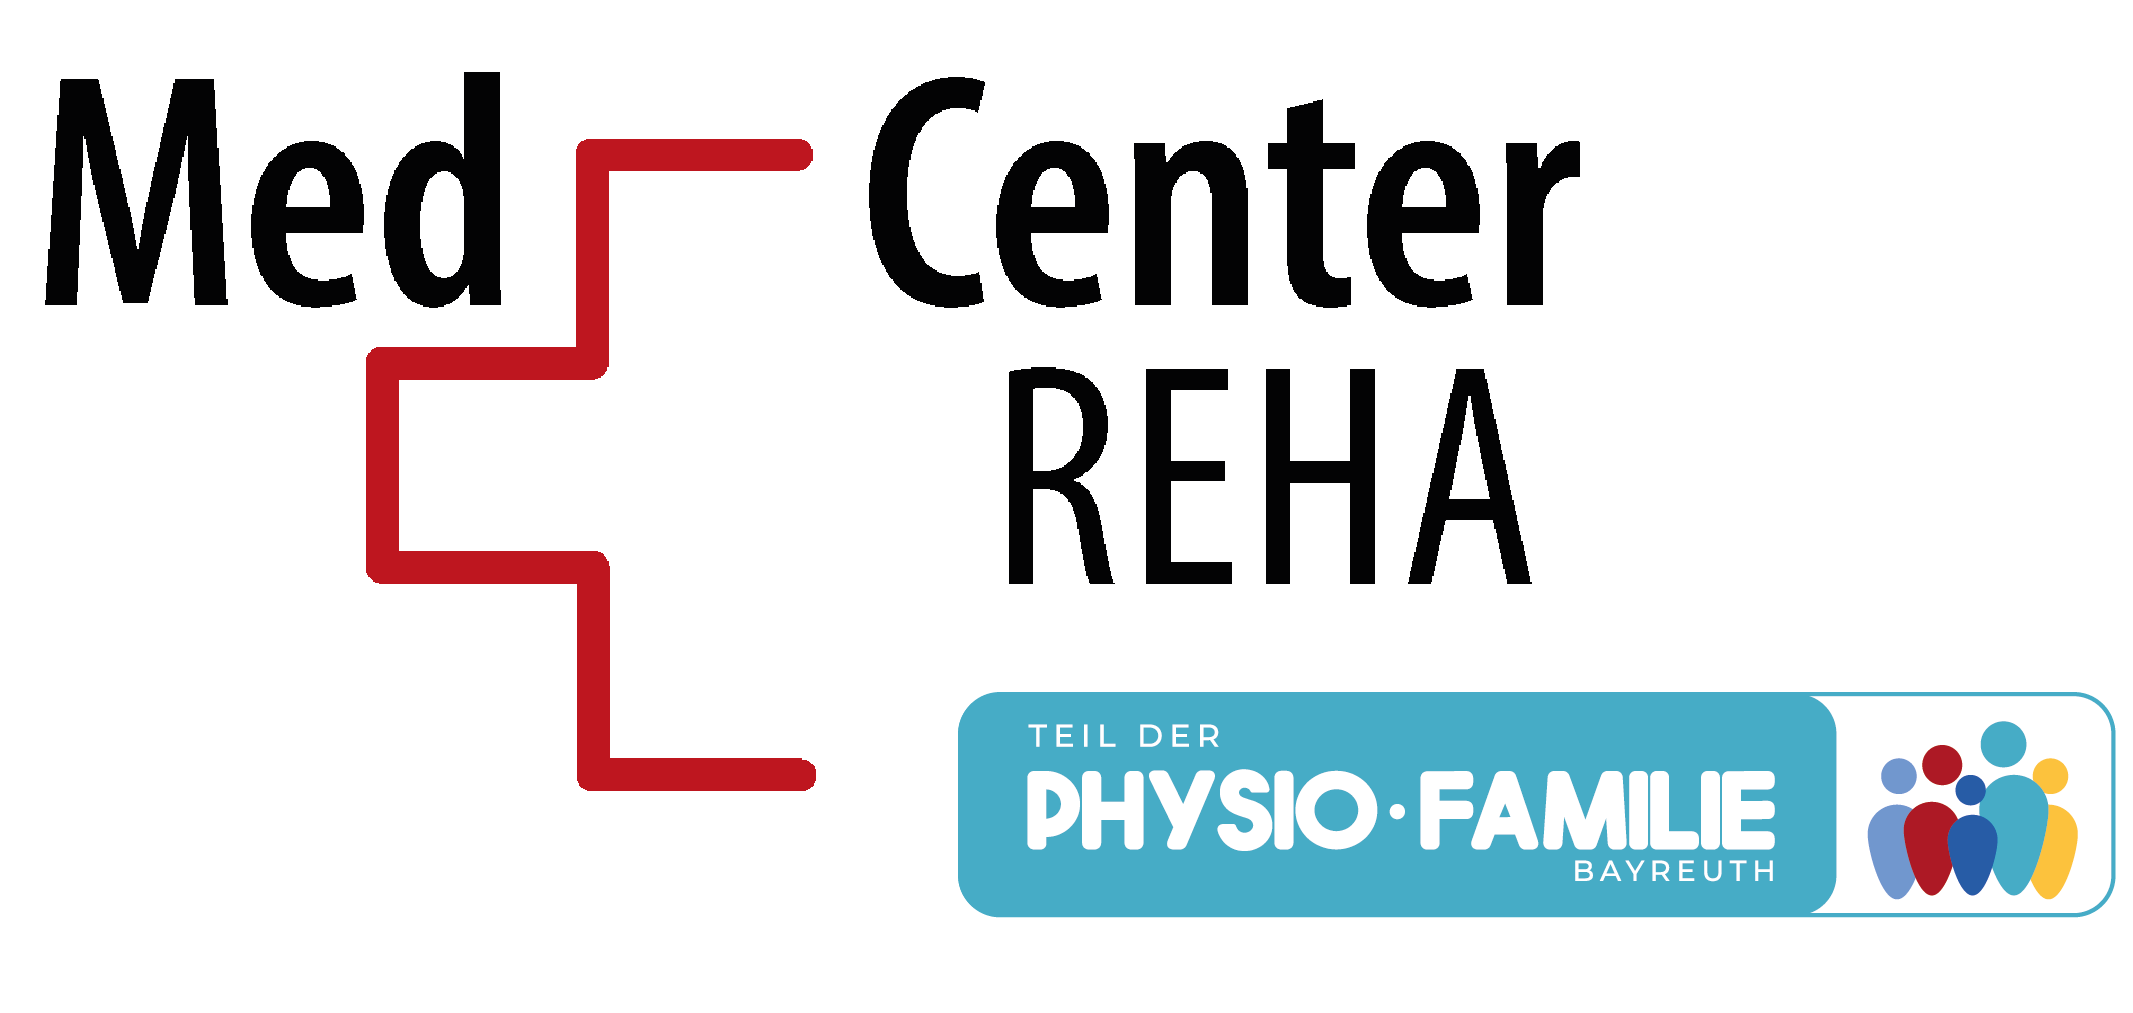 Medcenter Reha Logo